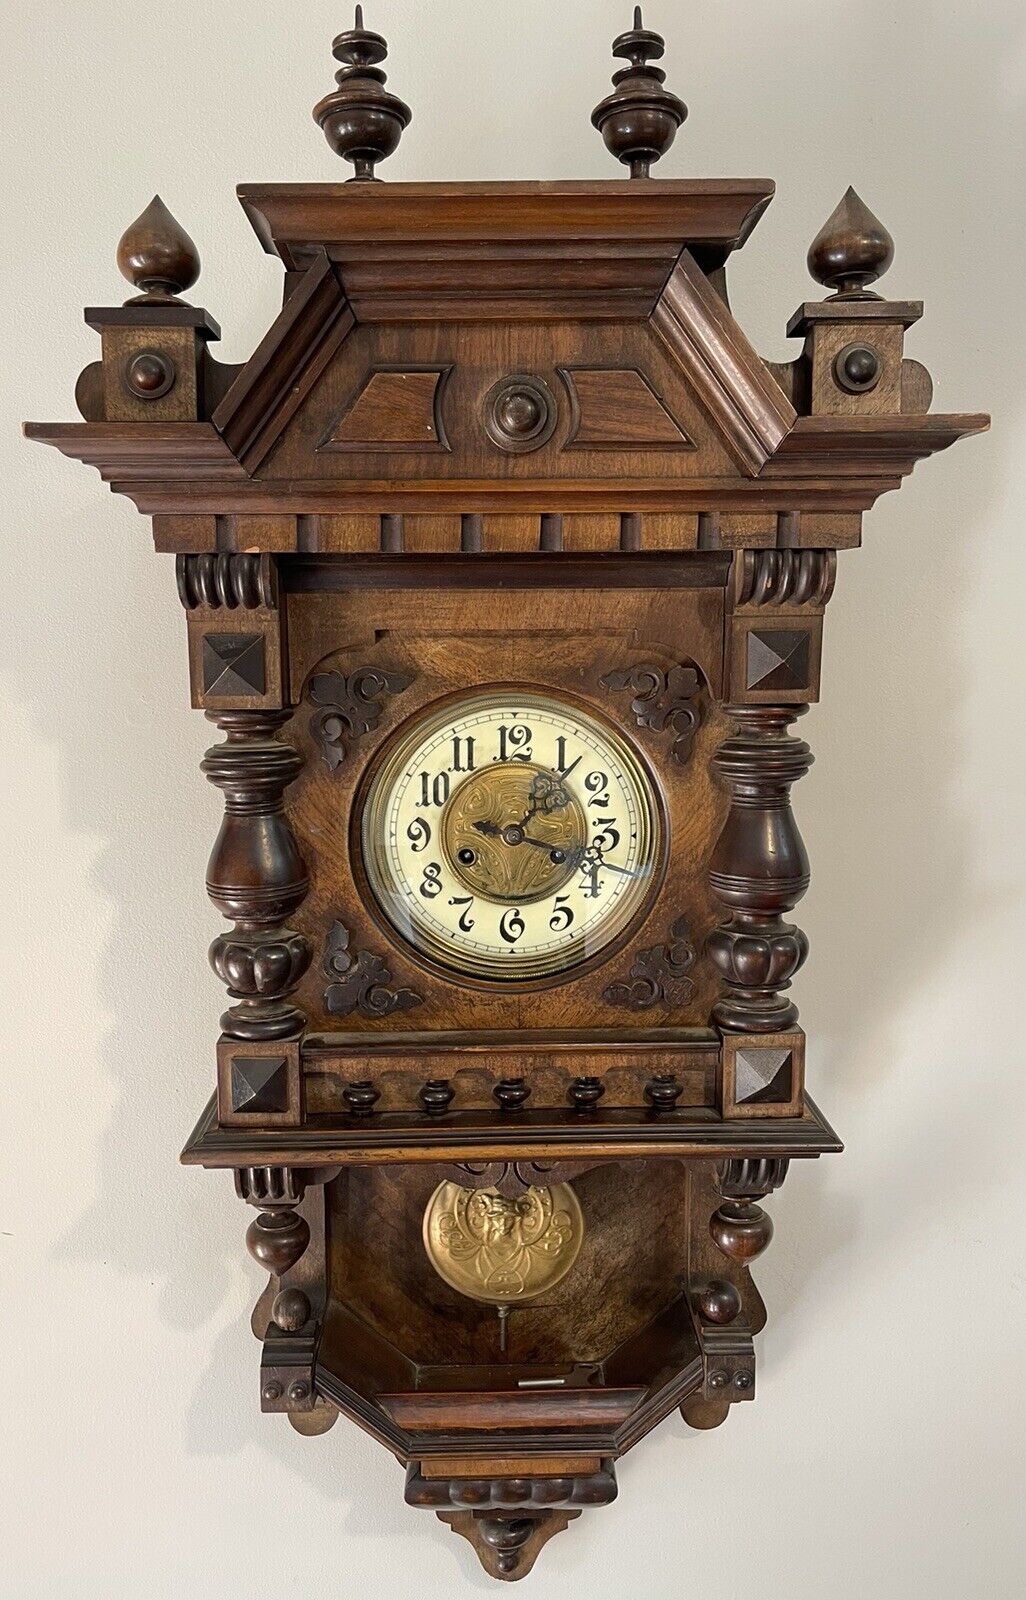 Antique Large Gustav Becker Harter Gong Free Swinger Wall Clock w/Key, 39